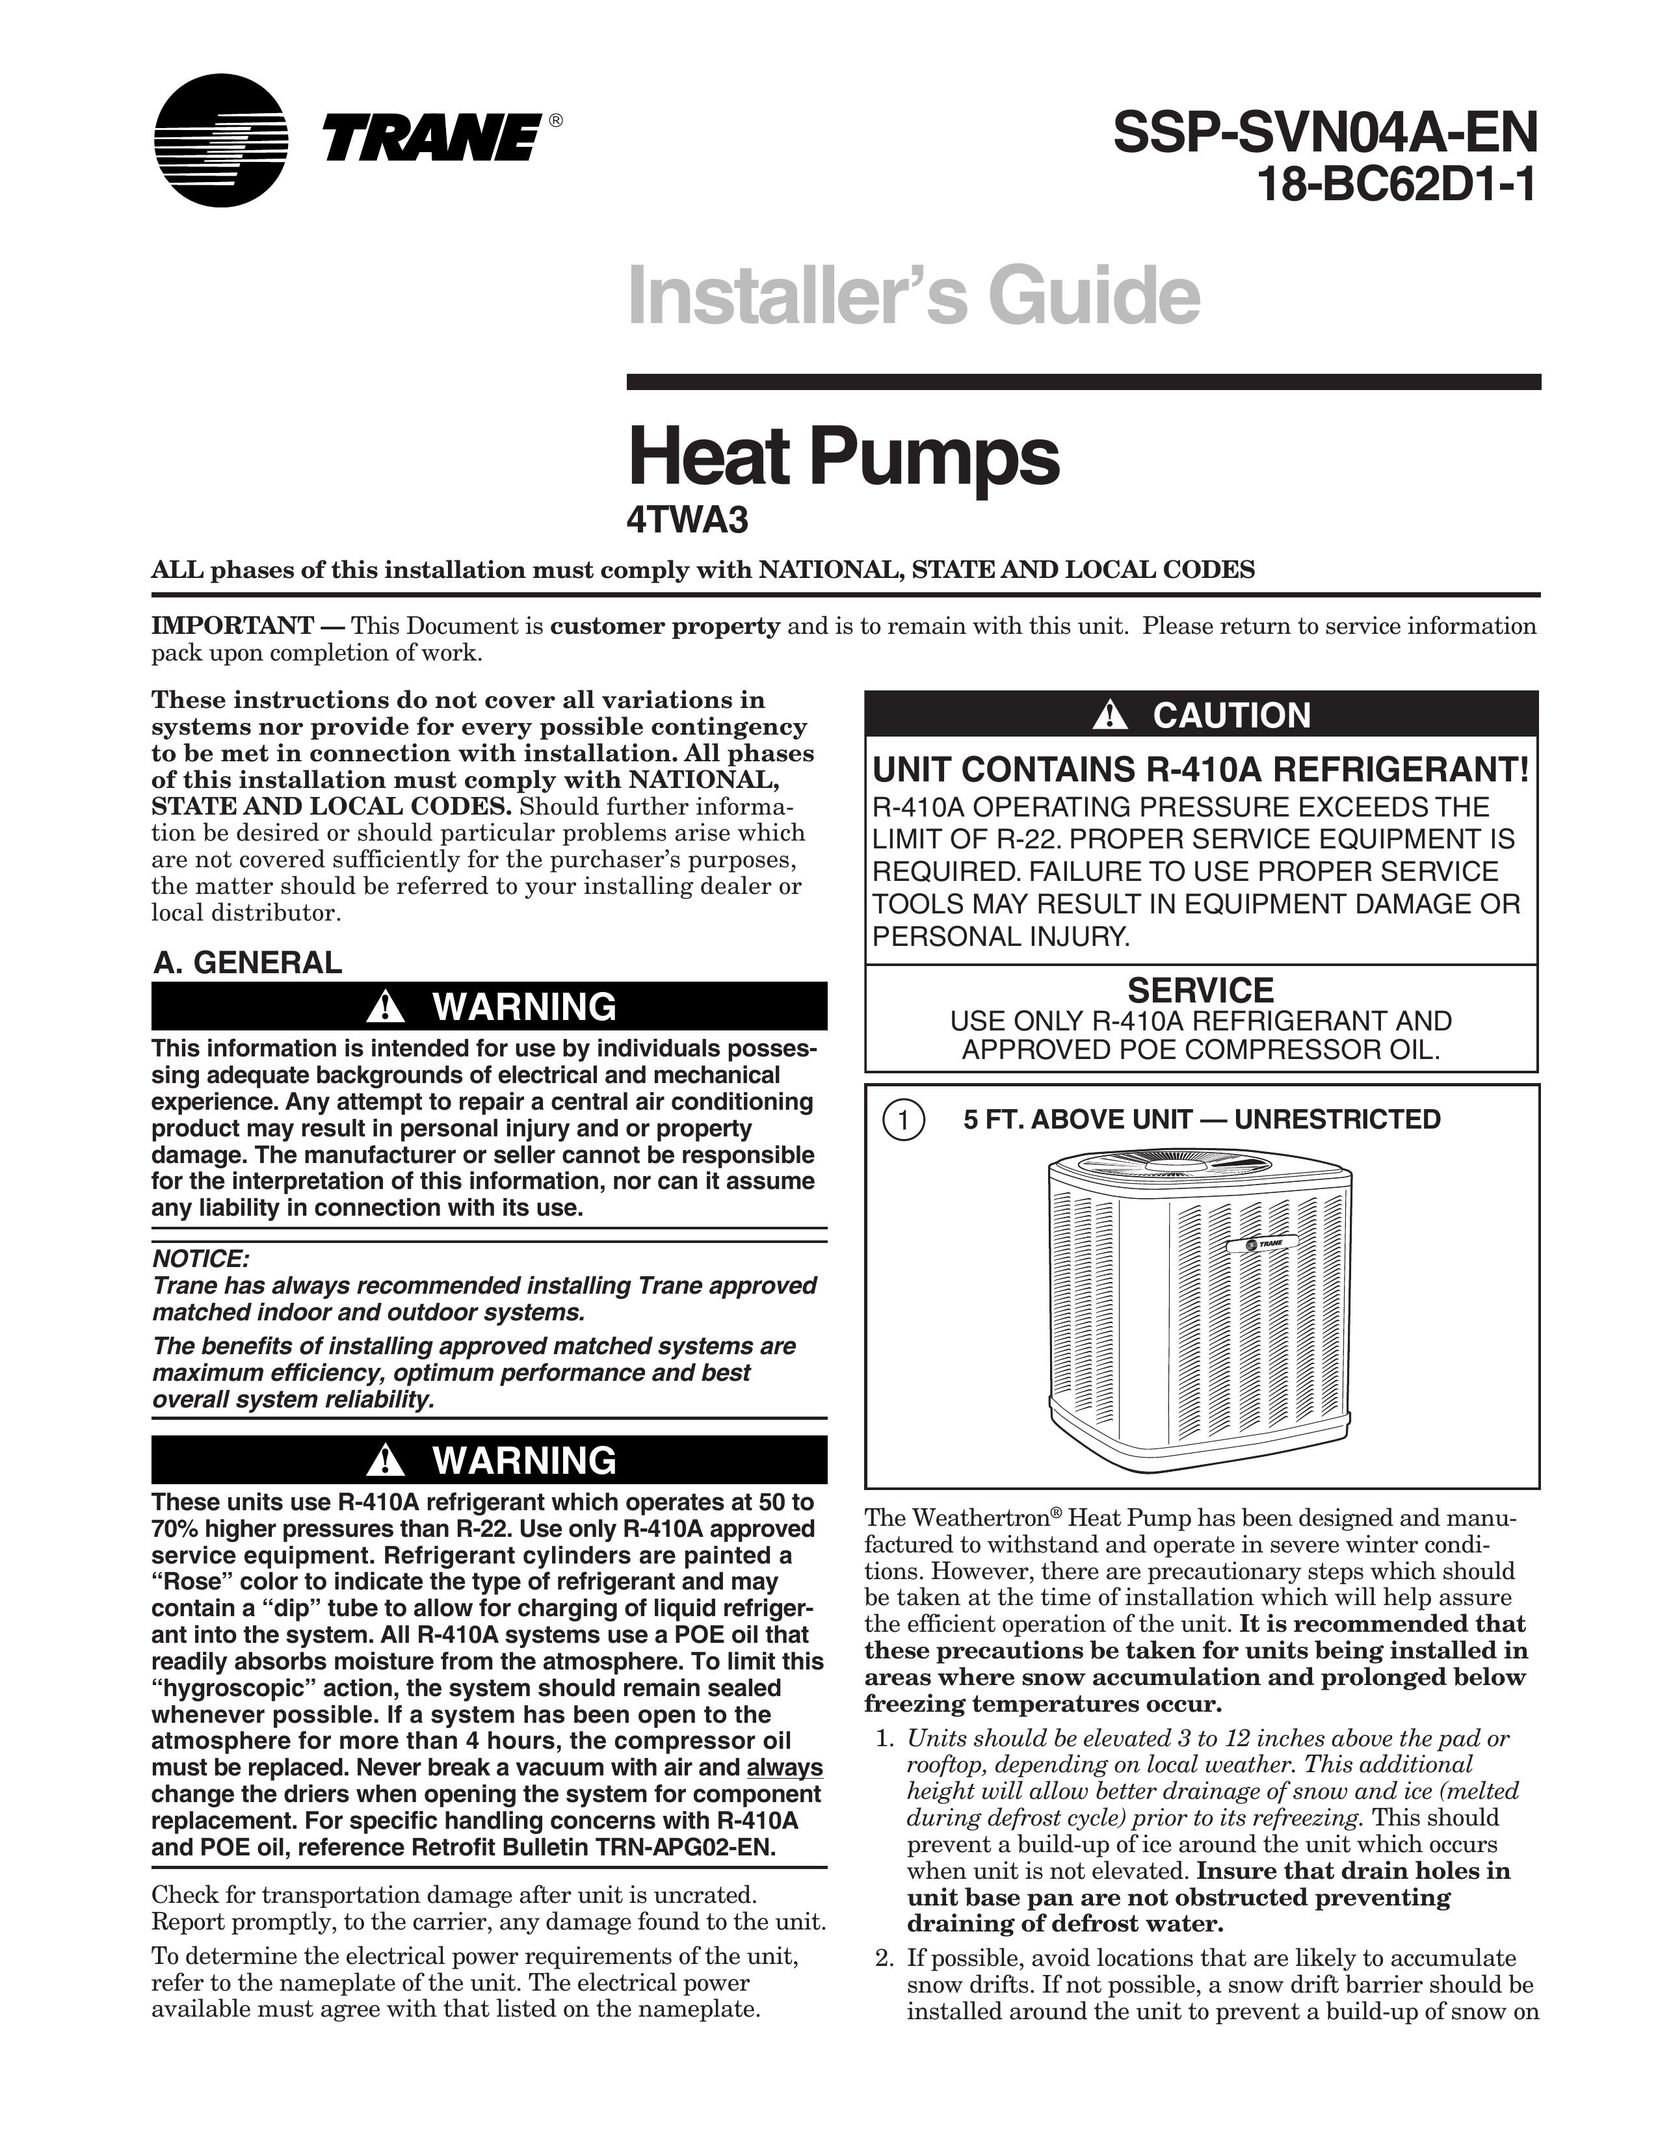 Trane 4TWA3 Heat Pump User Manual